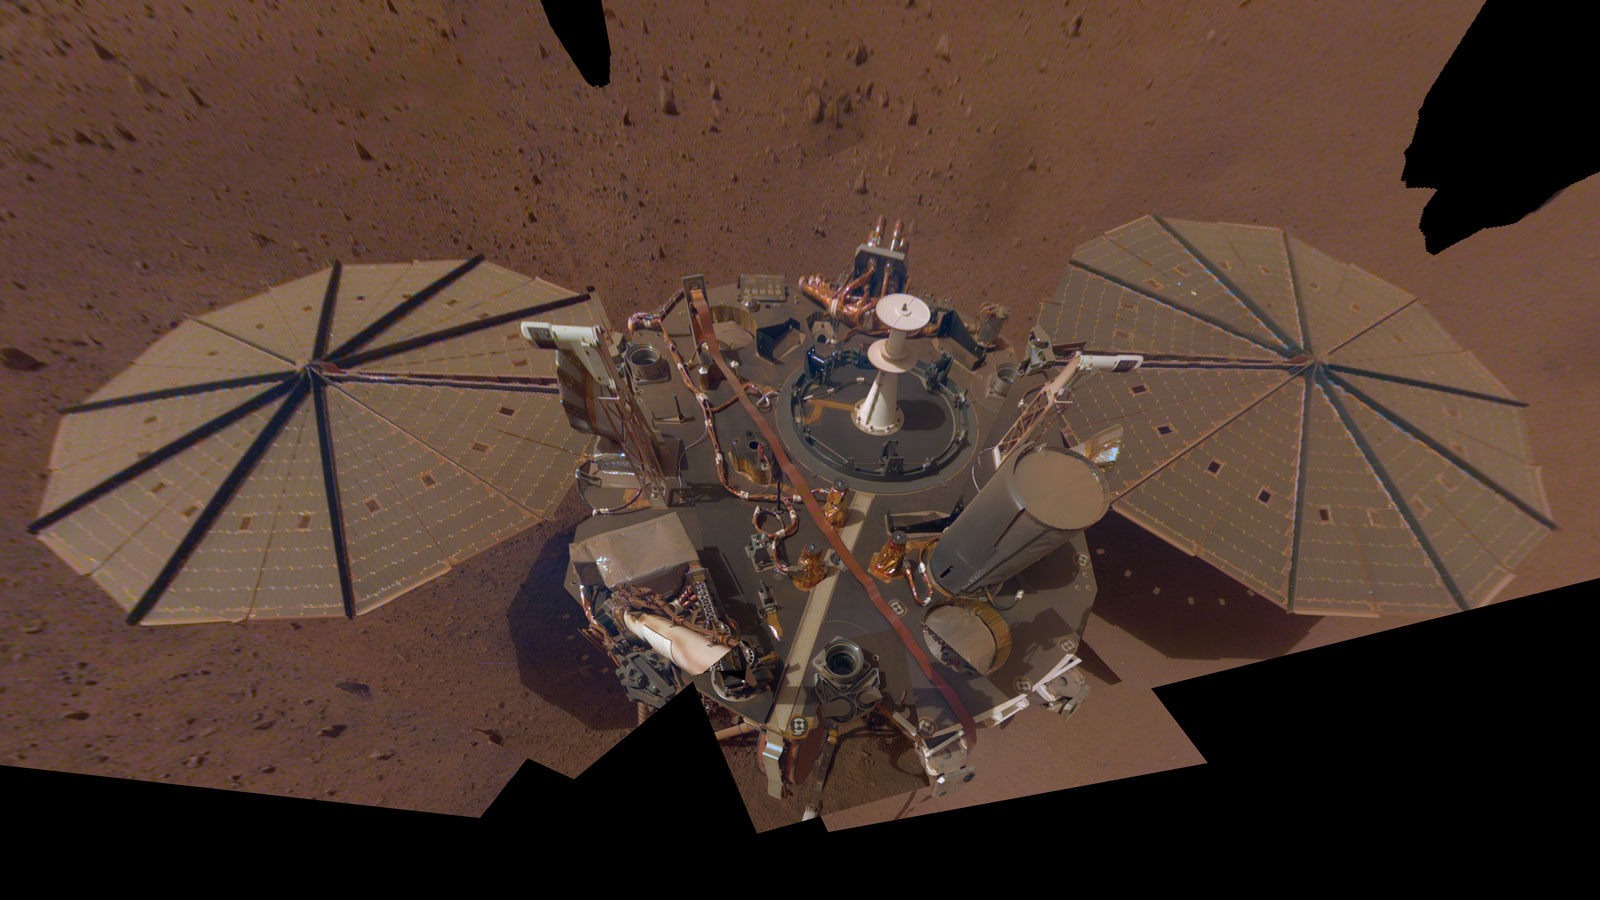 slide 2 - Selfie image of Mars InSight lander with its solar panels